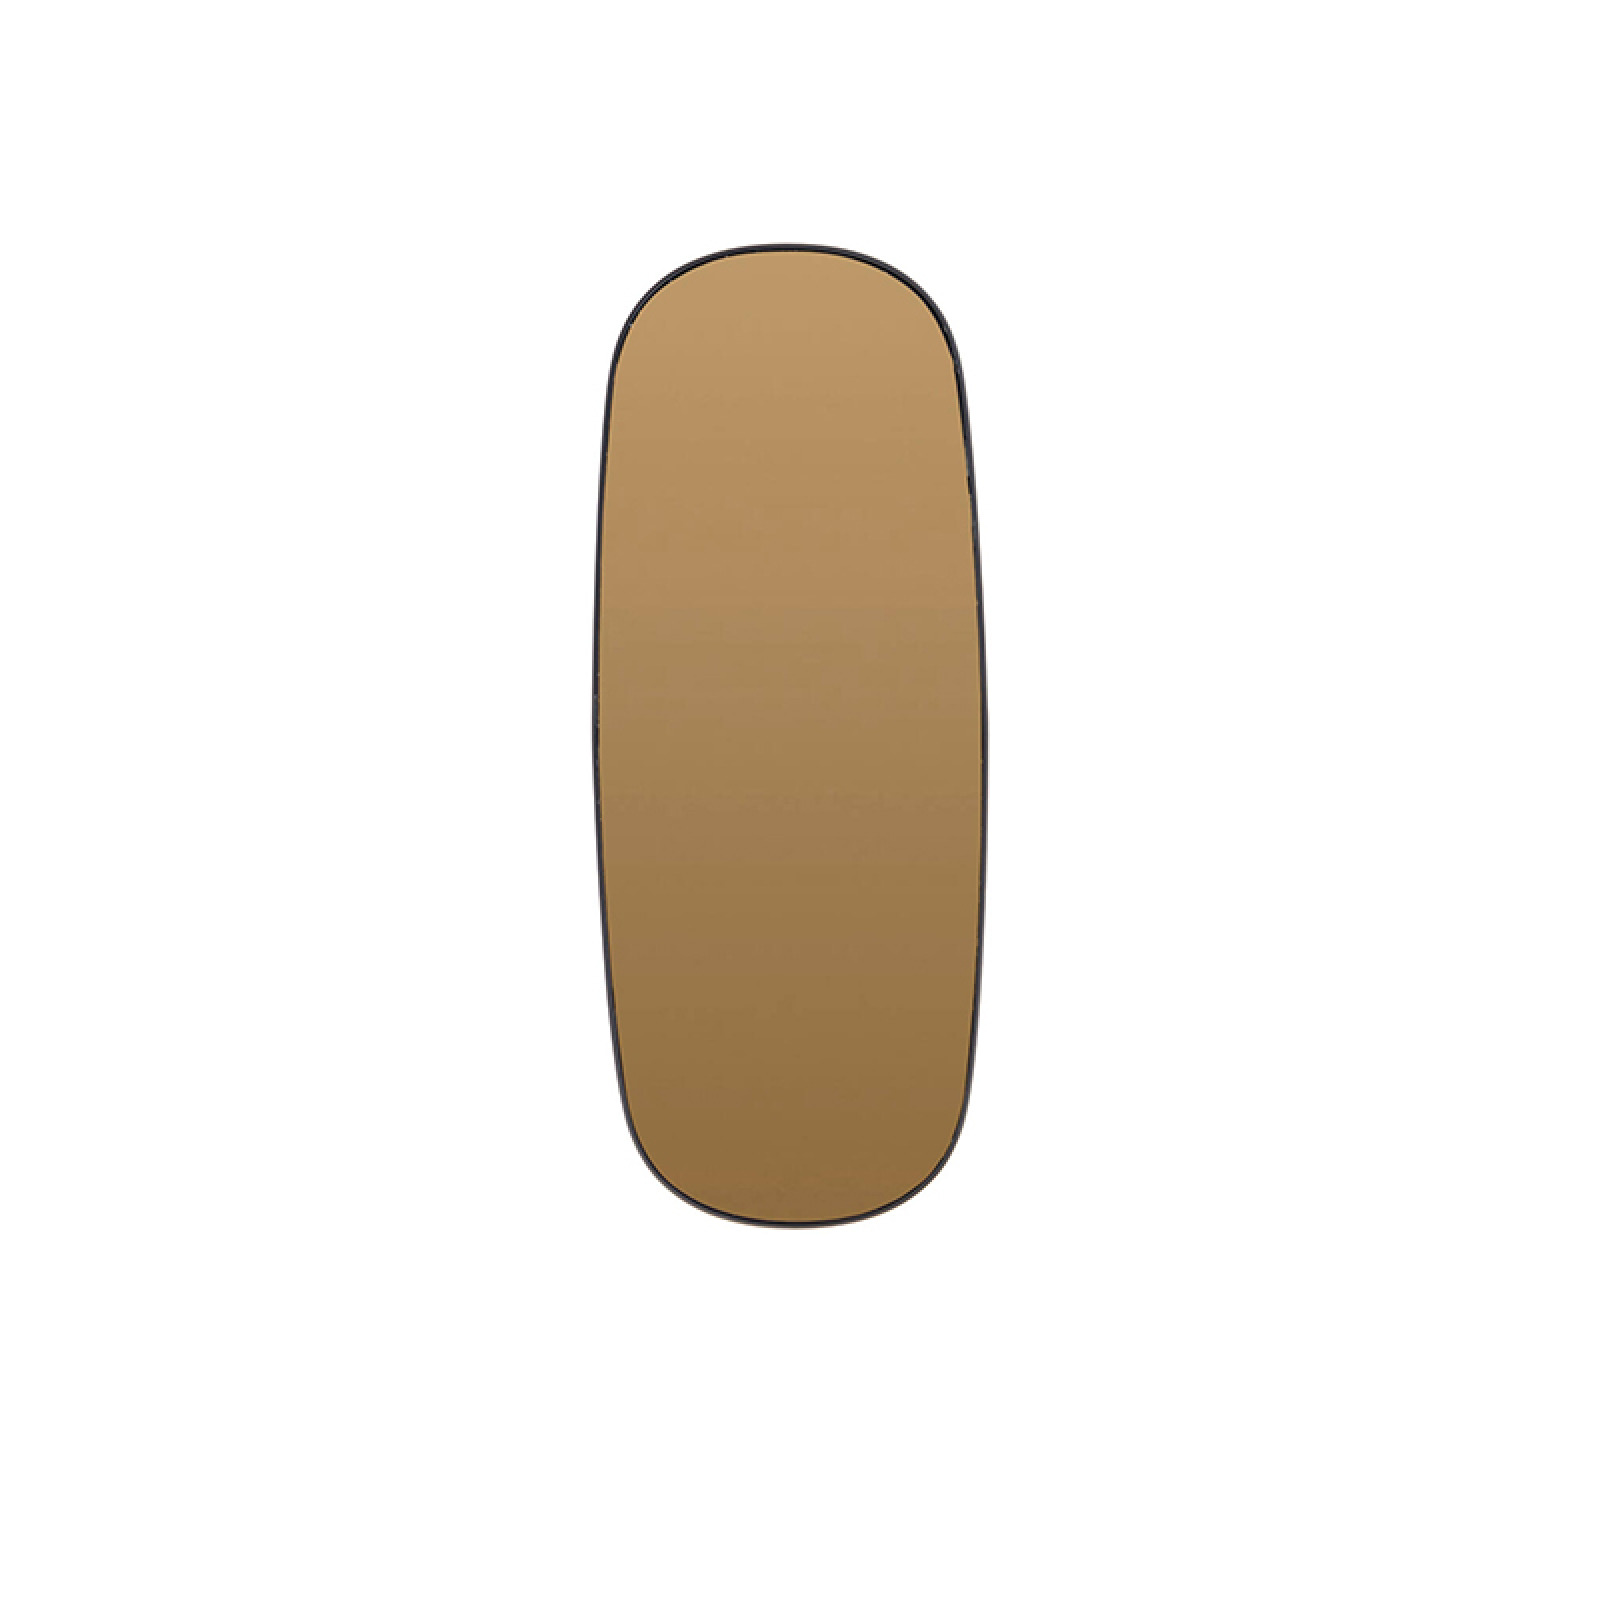 Libra brown mirror